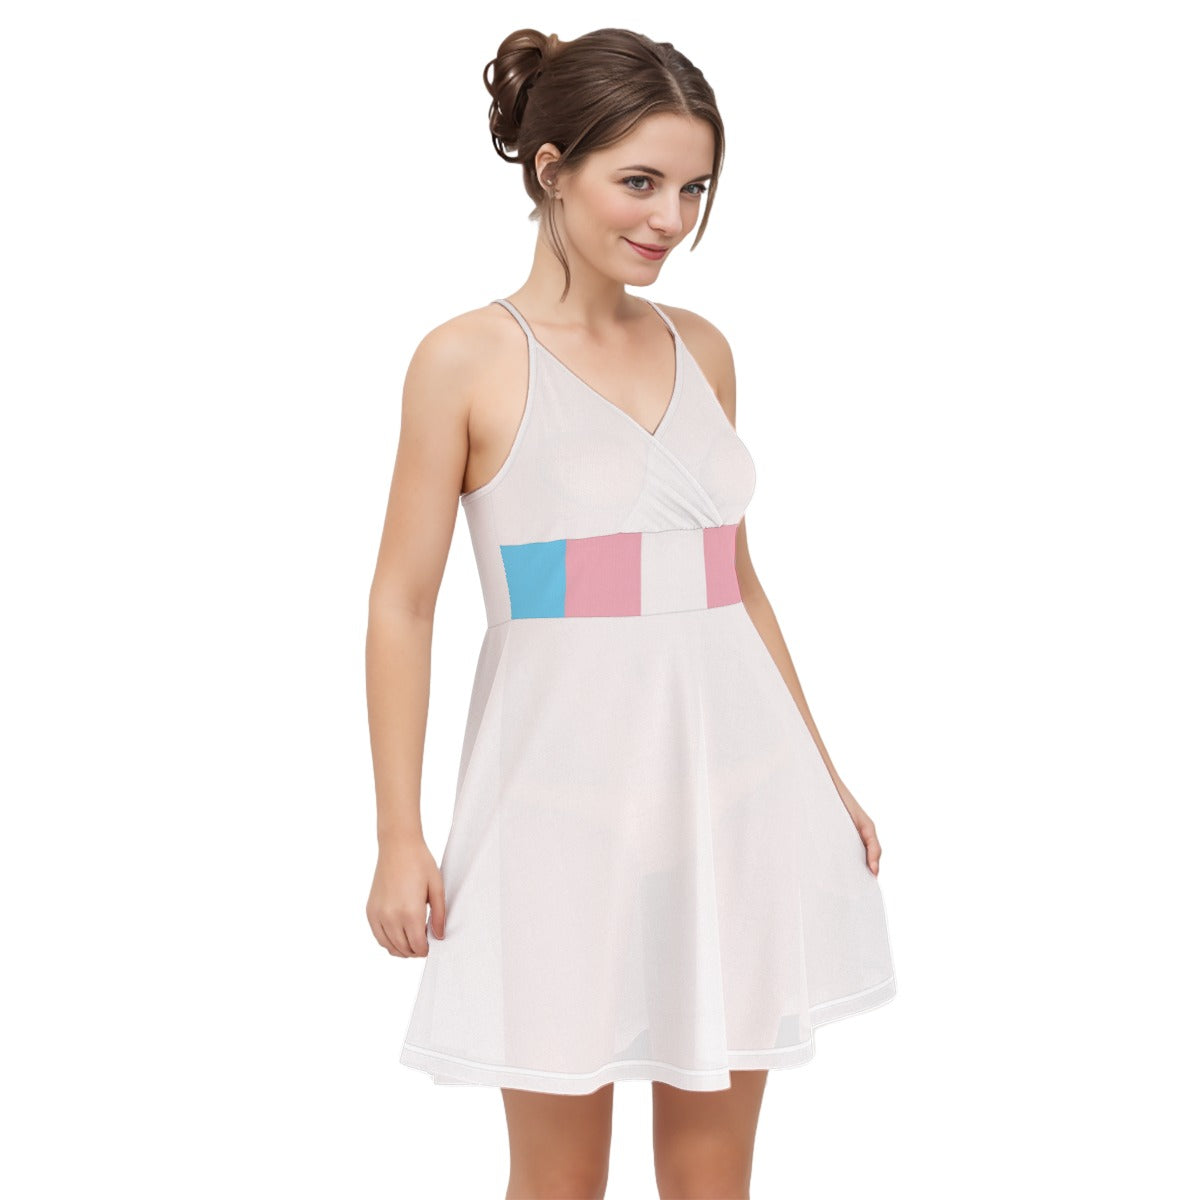 Teen - Plus Size Blue Pink White Pride Cross-Strap Cami Dress